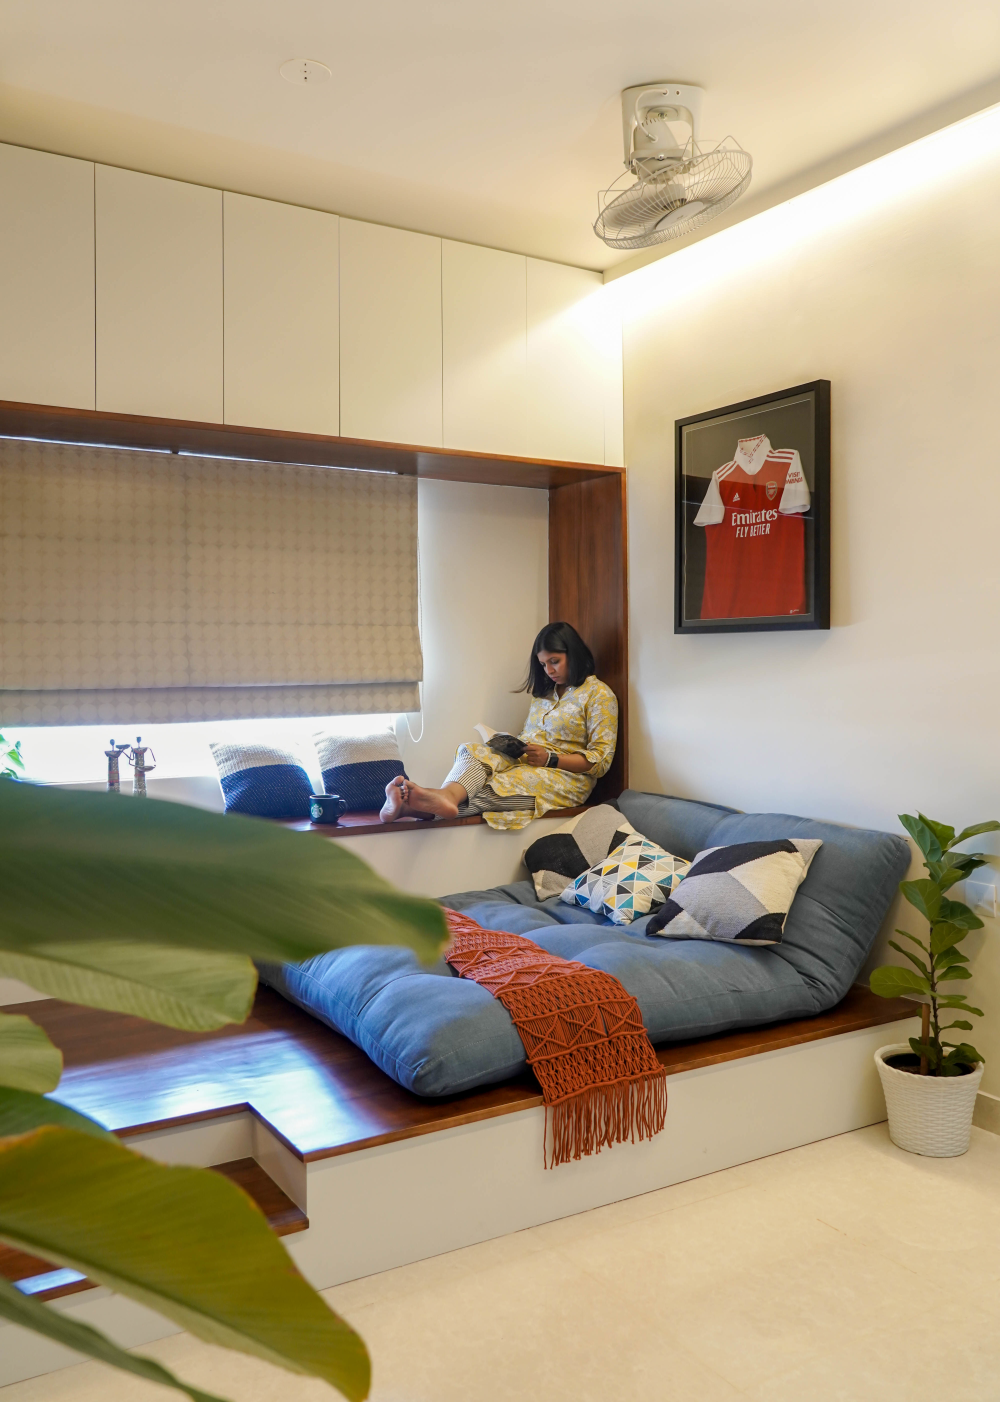 apartment in kochi lighting design images gallery